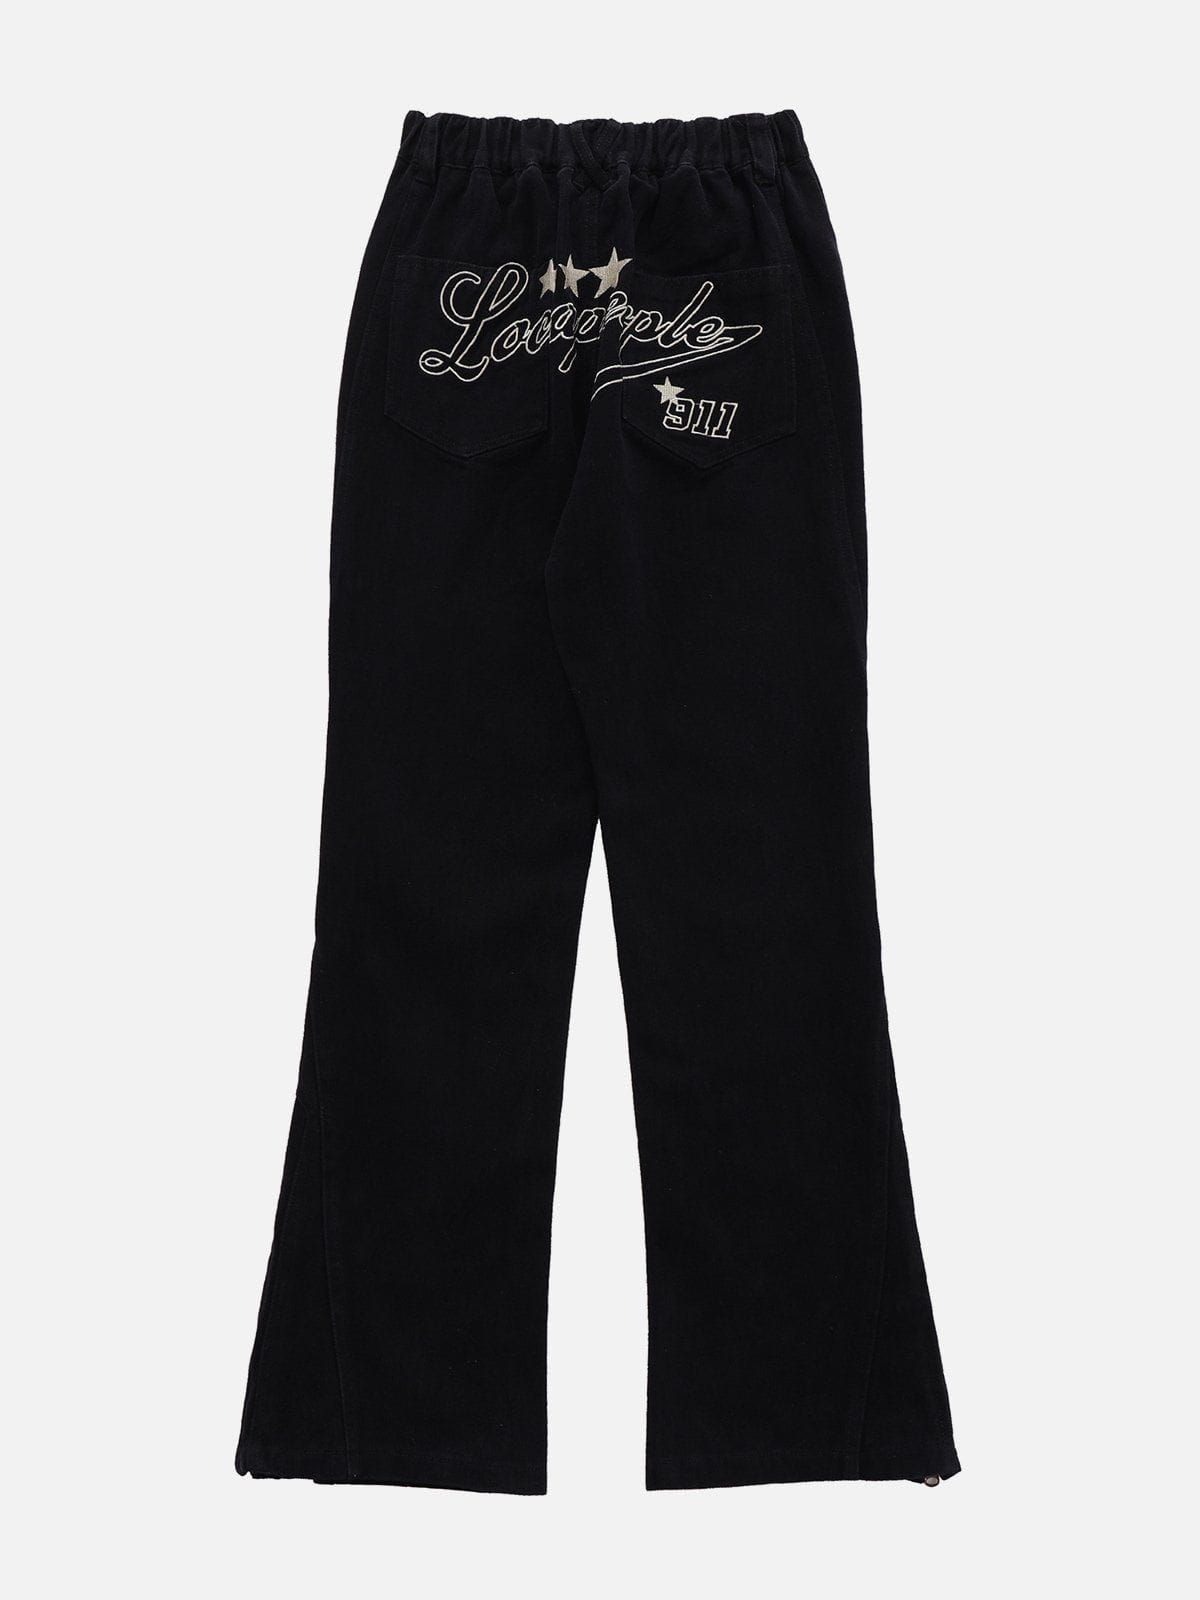 Eprezzy® - Pant Leg Openings Sweatpants Streetwear Fashion - eprezzy.com